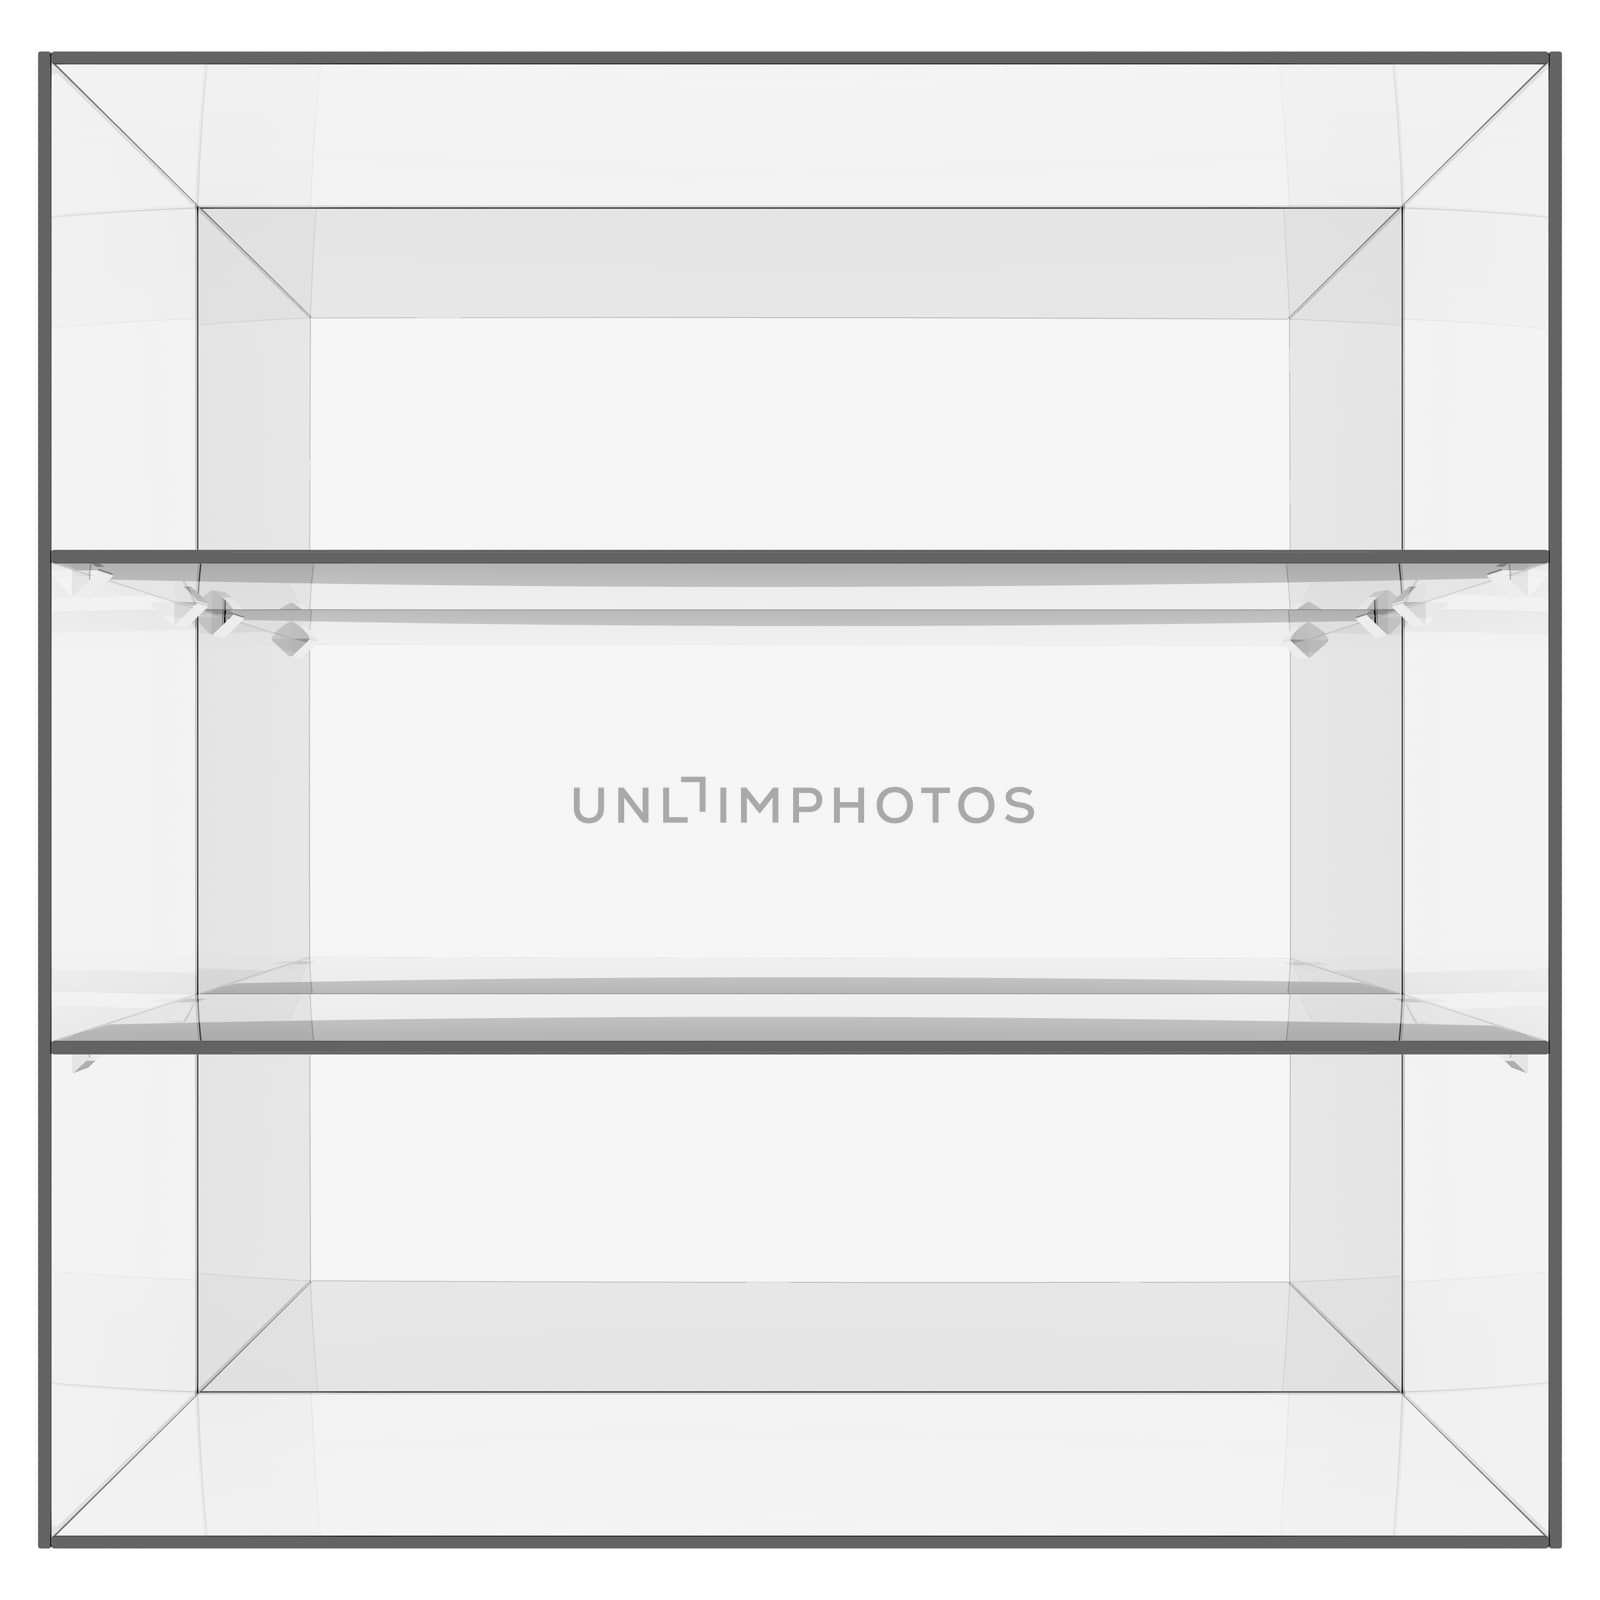 Glass shelves. 3d render isolated on white background